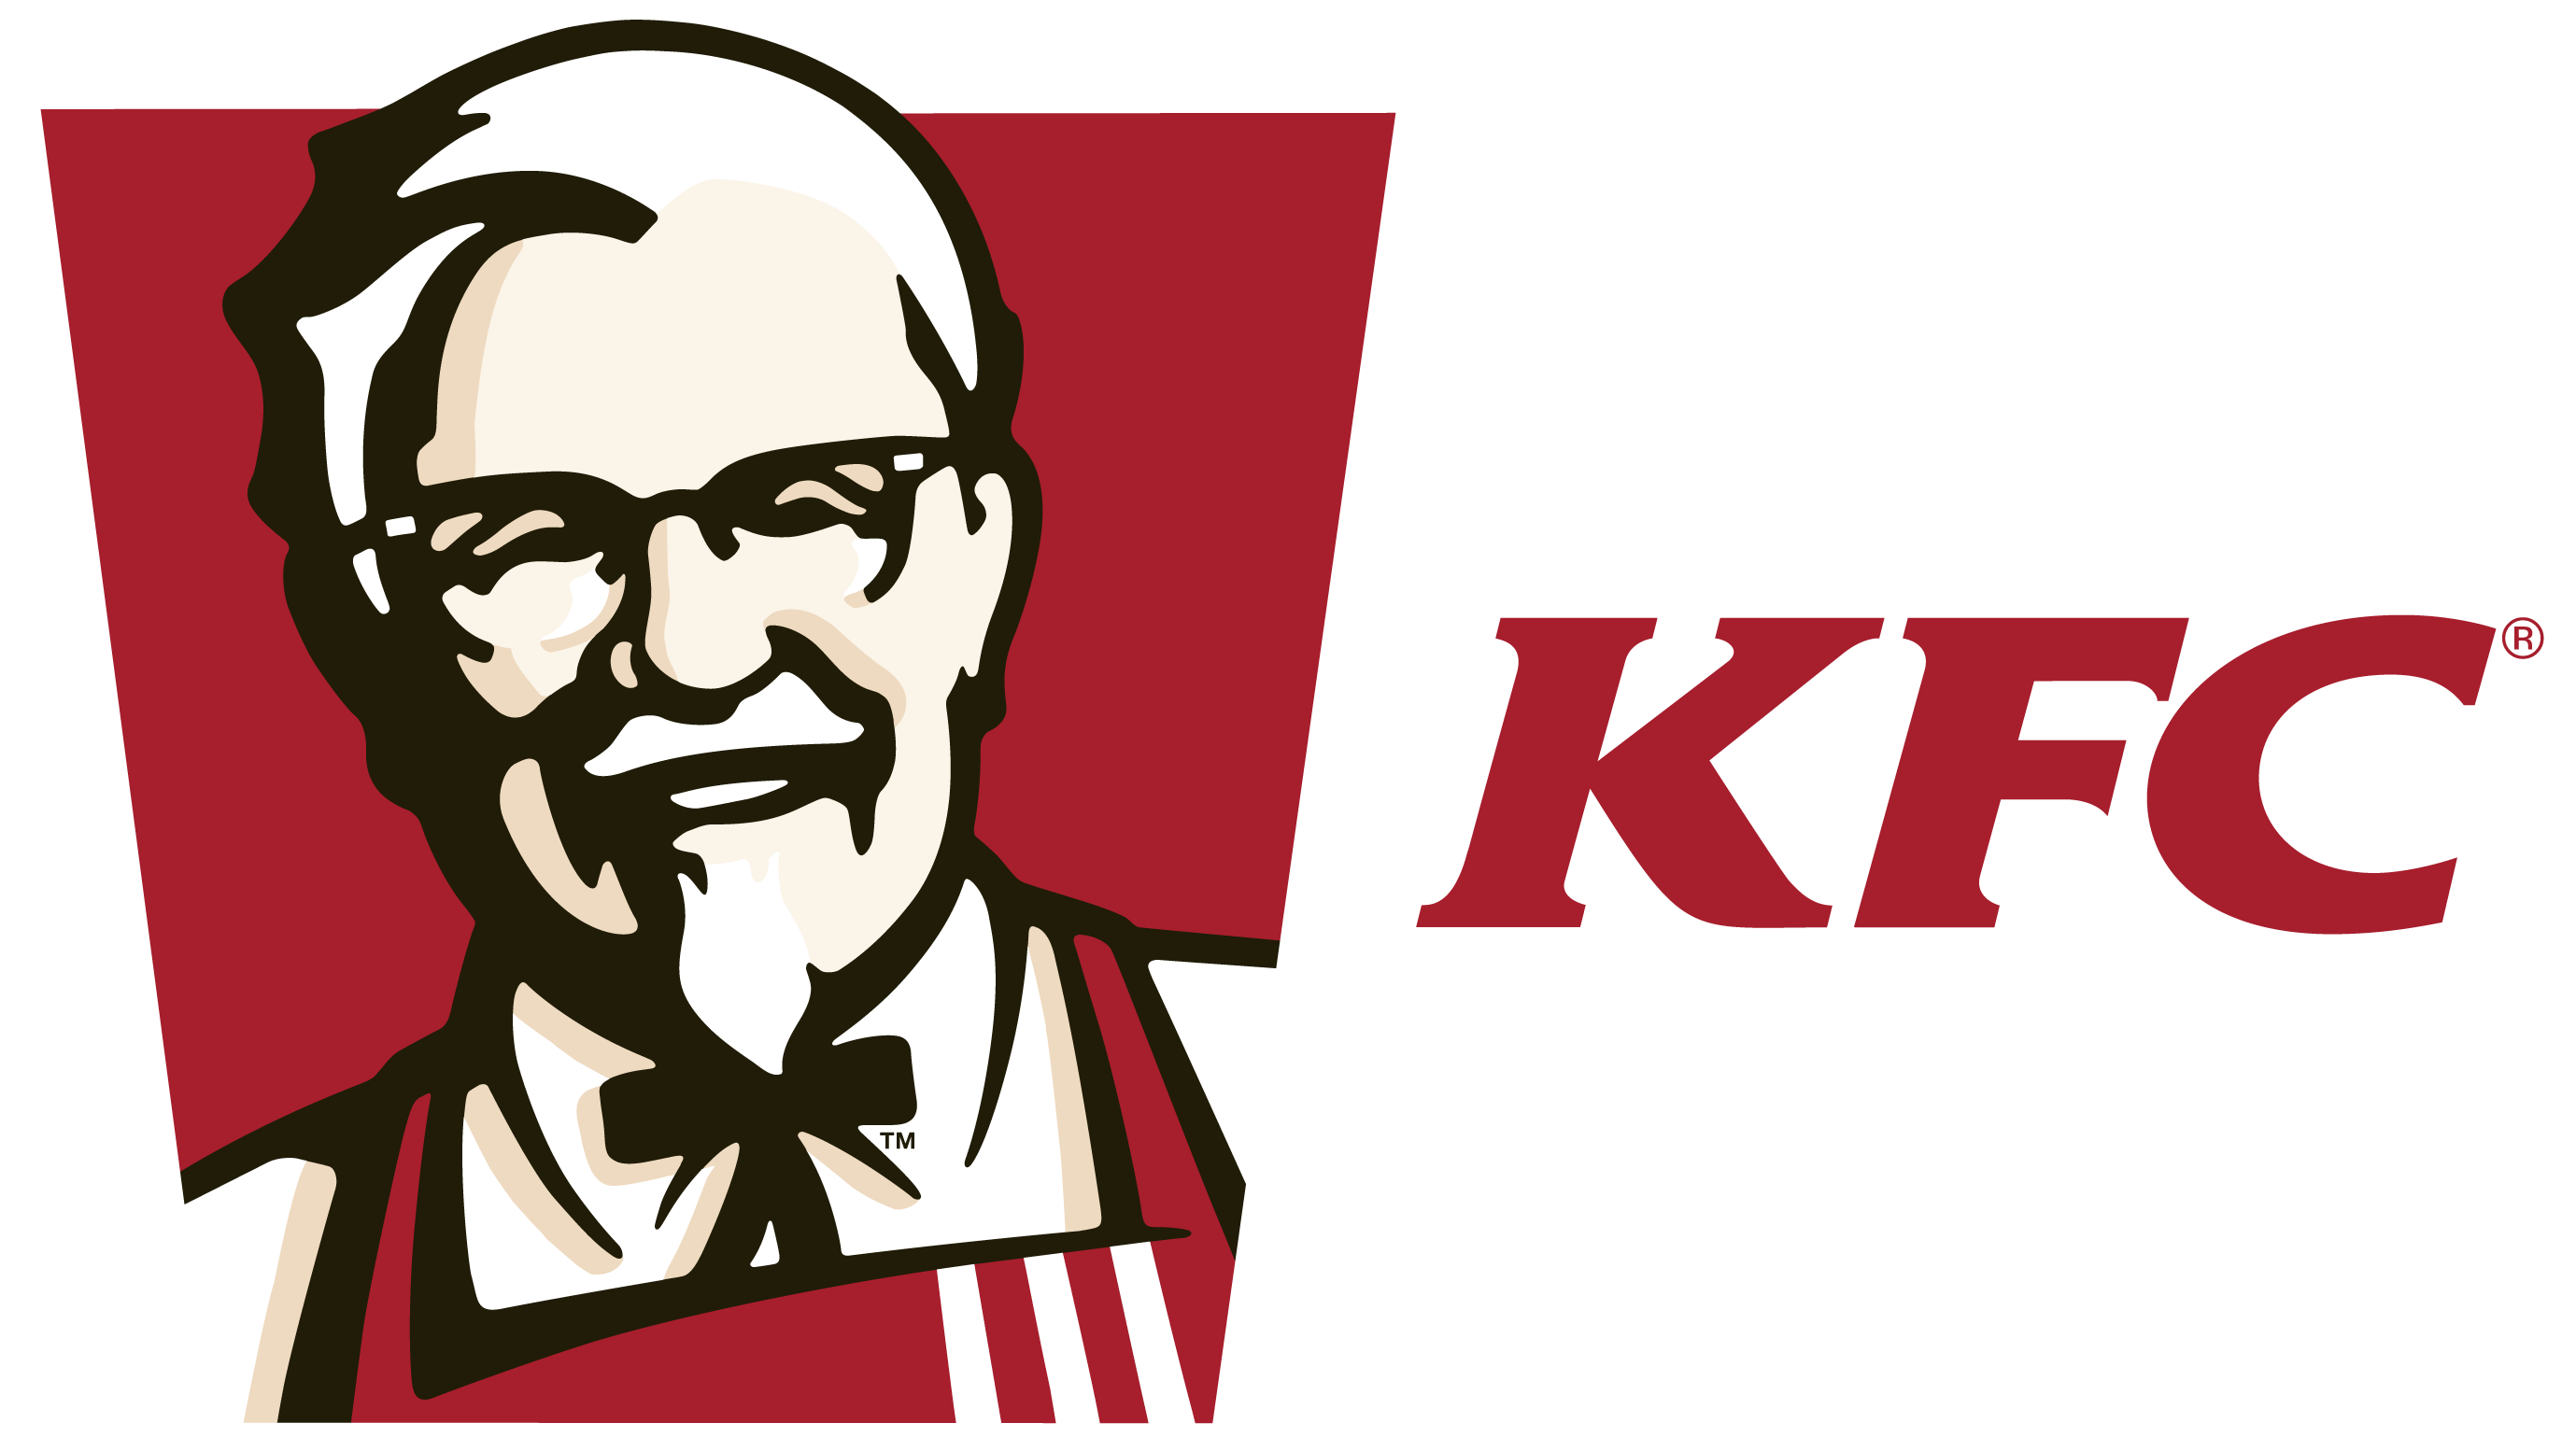 KFC - Wikipedia